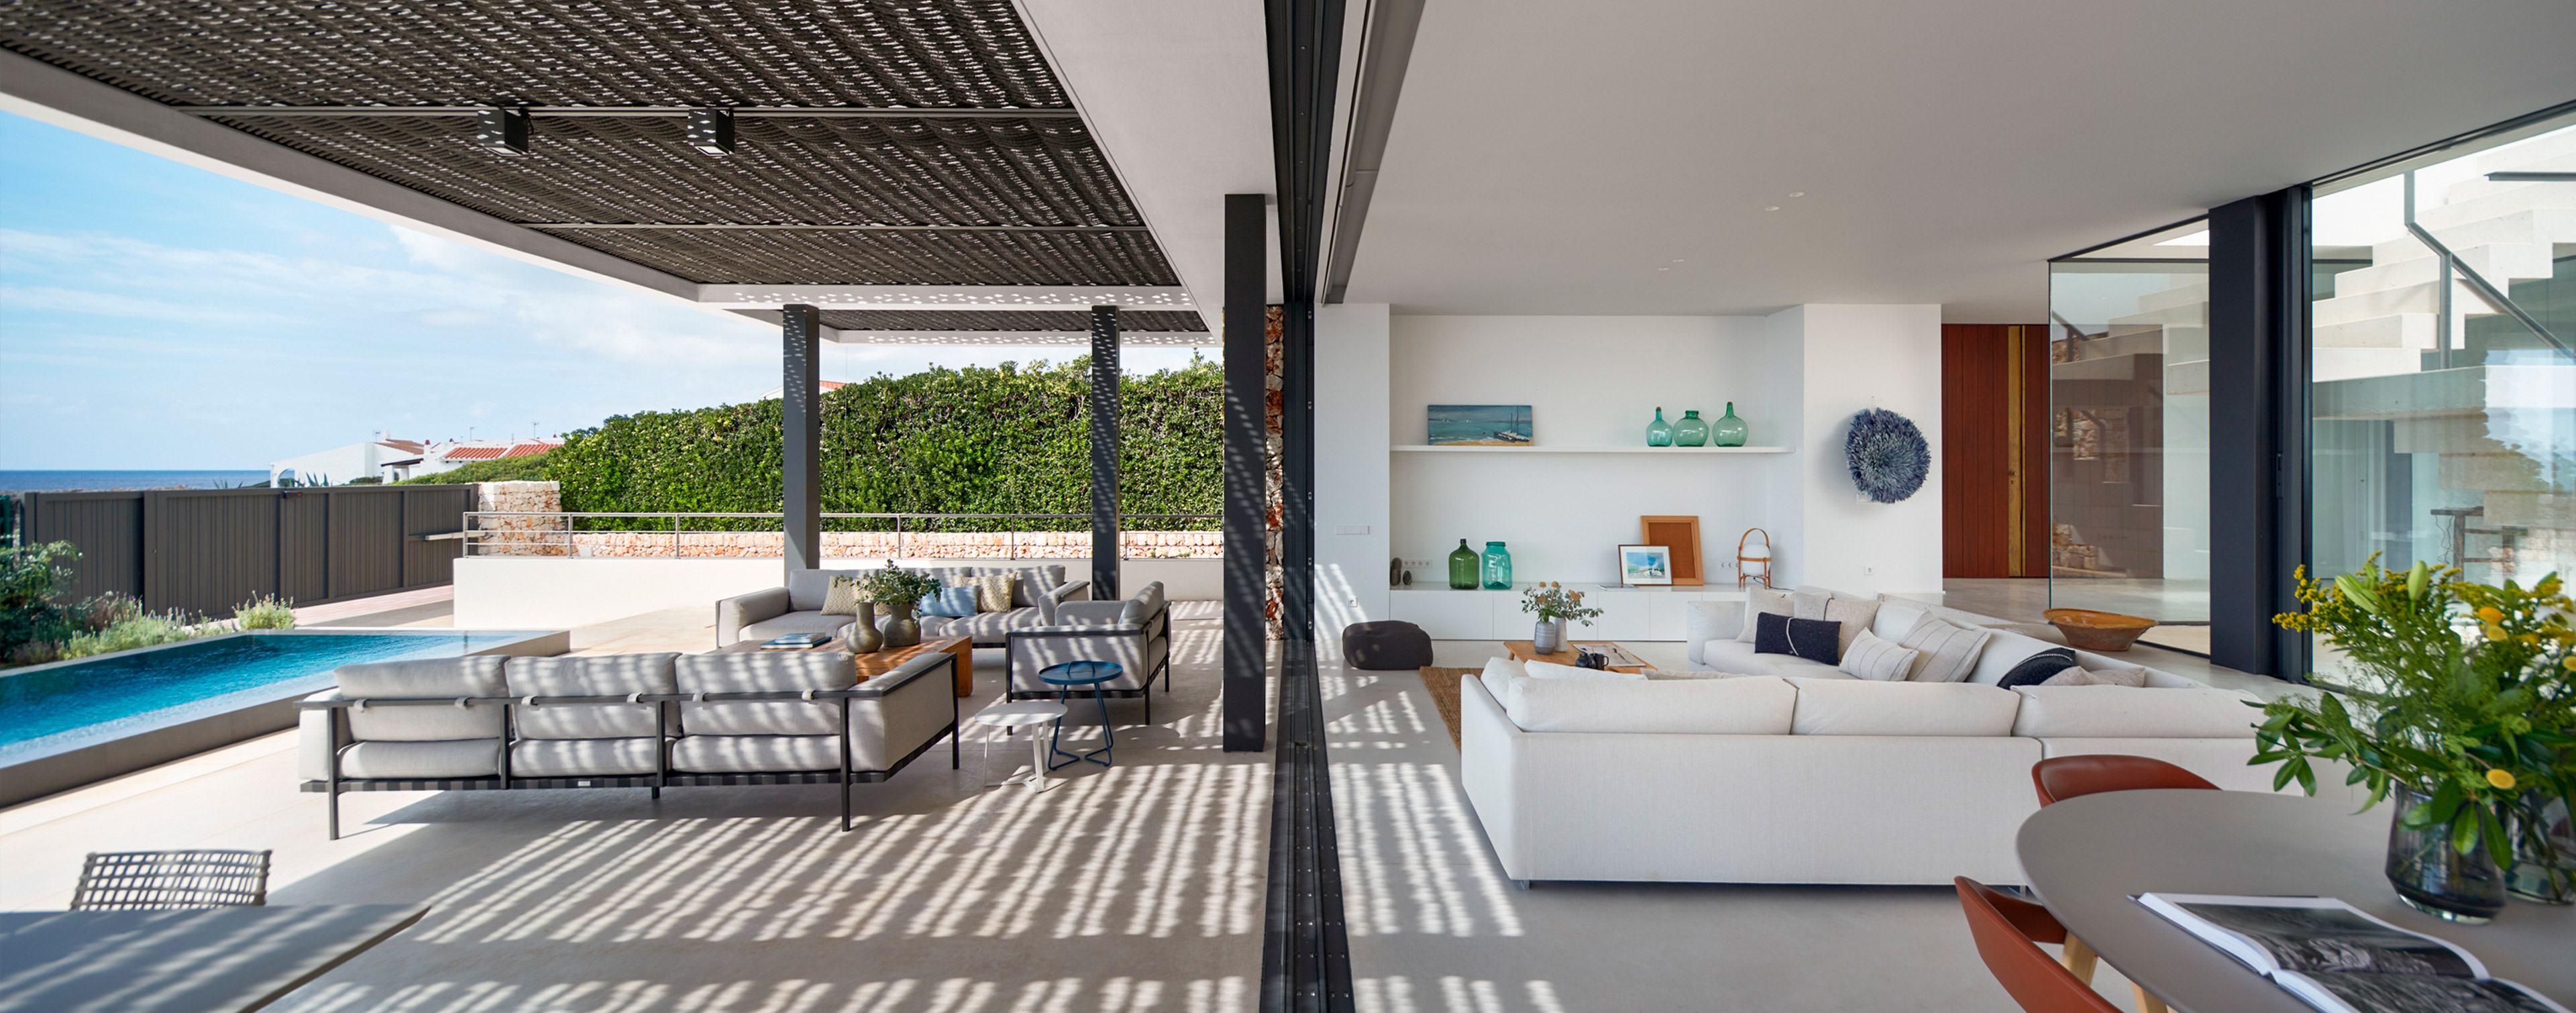 luv studio luxury architects menorca binibequer house IMG 02 - Binibeca Villa